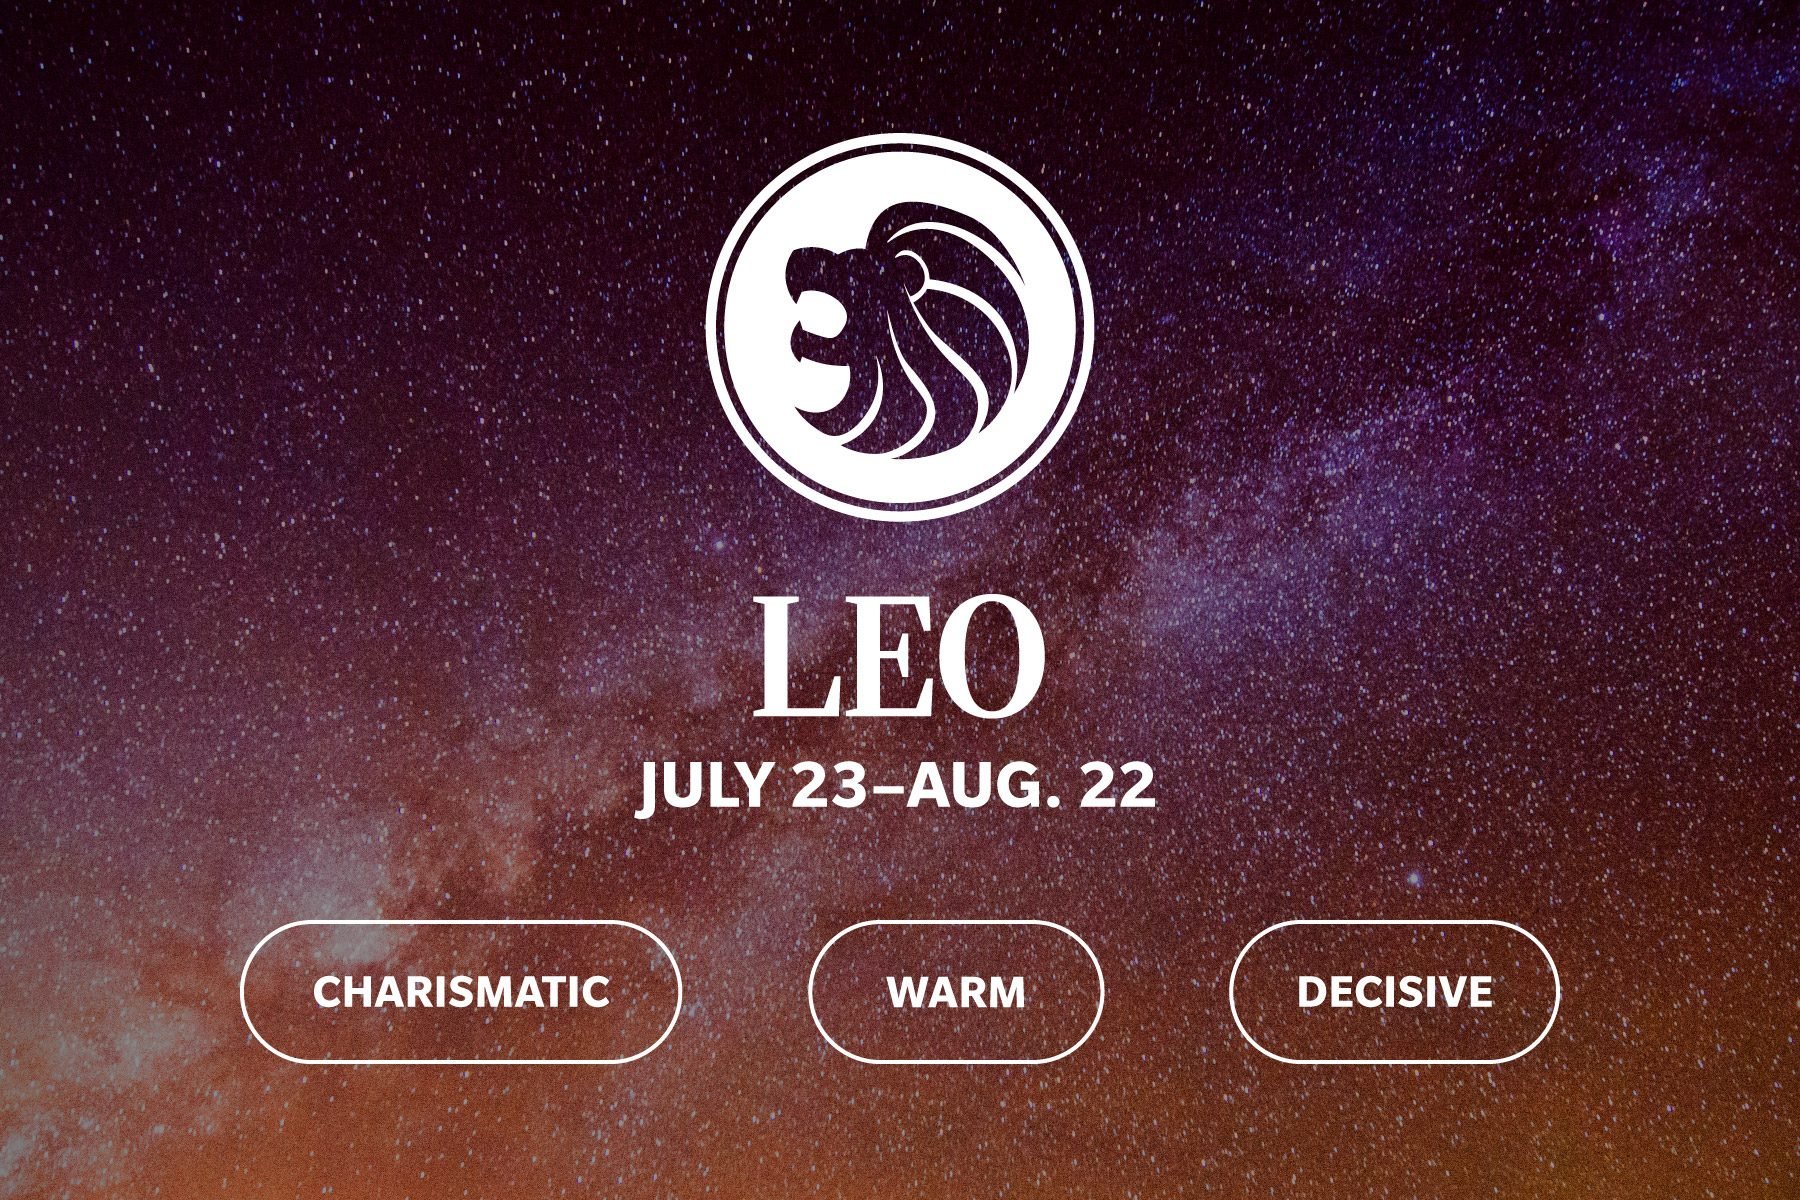 Zodiac sign qualities on galaxy background Leo